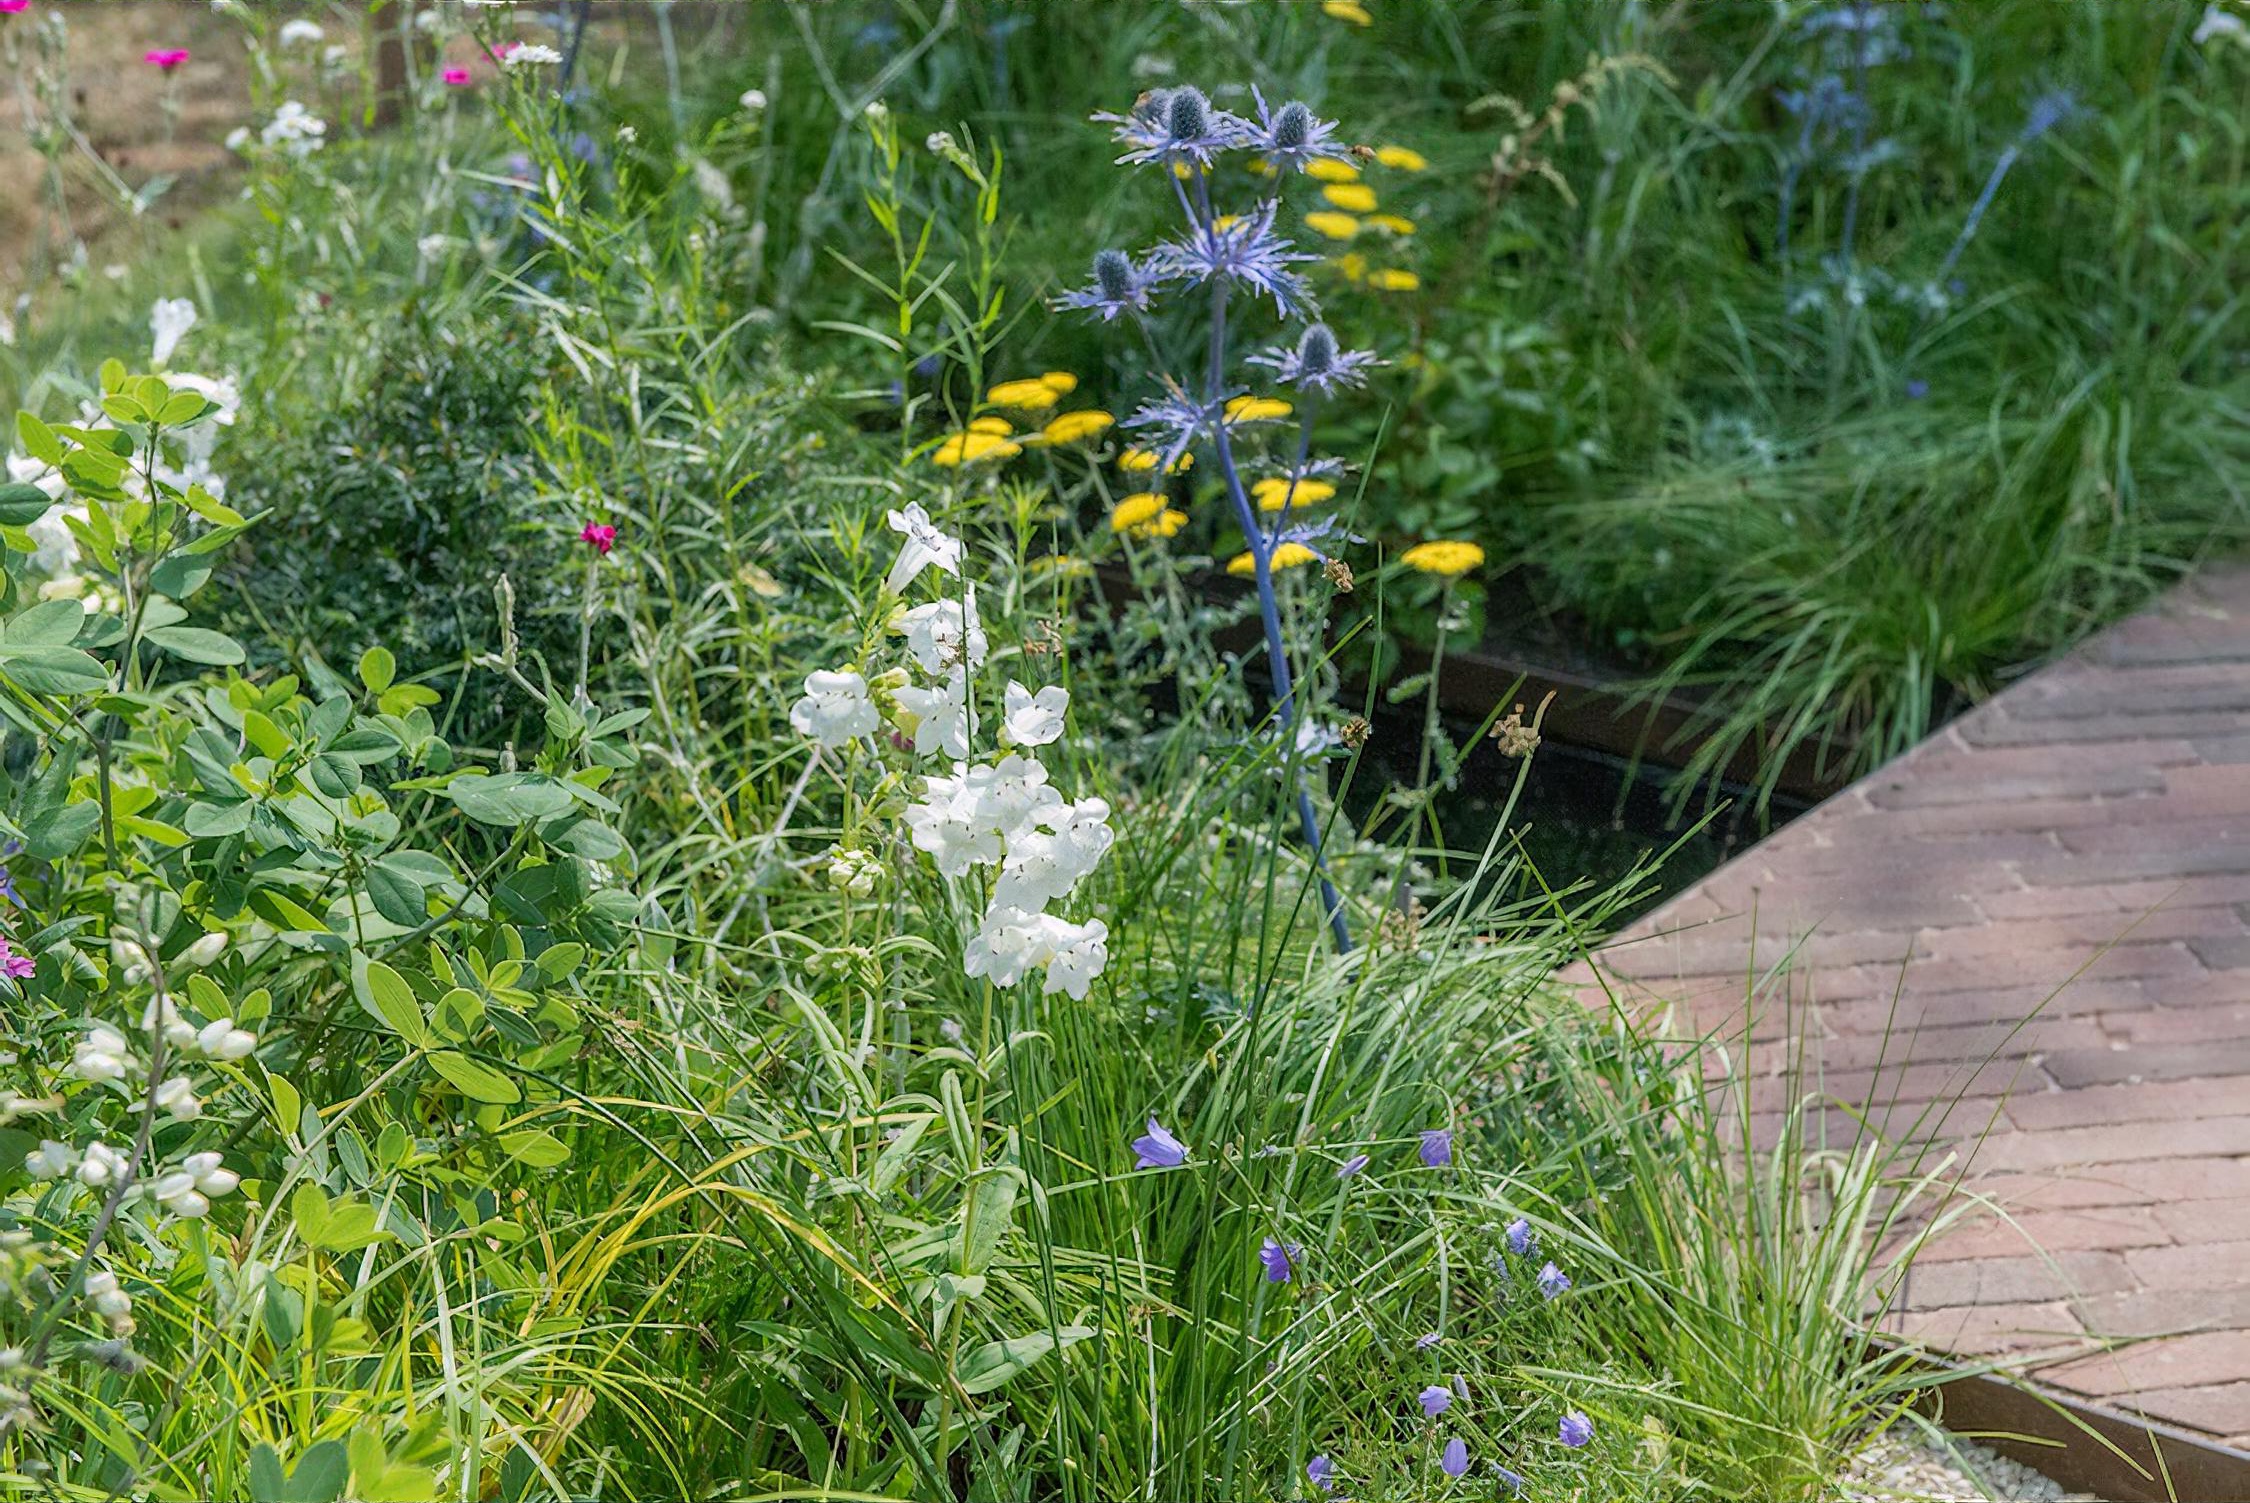 The South Oxfordshire Landscape Garden Hampton Court Flower Show 2018 by garden designer Rory Andrews